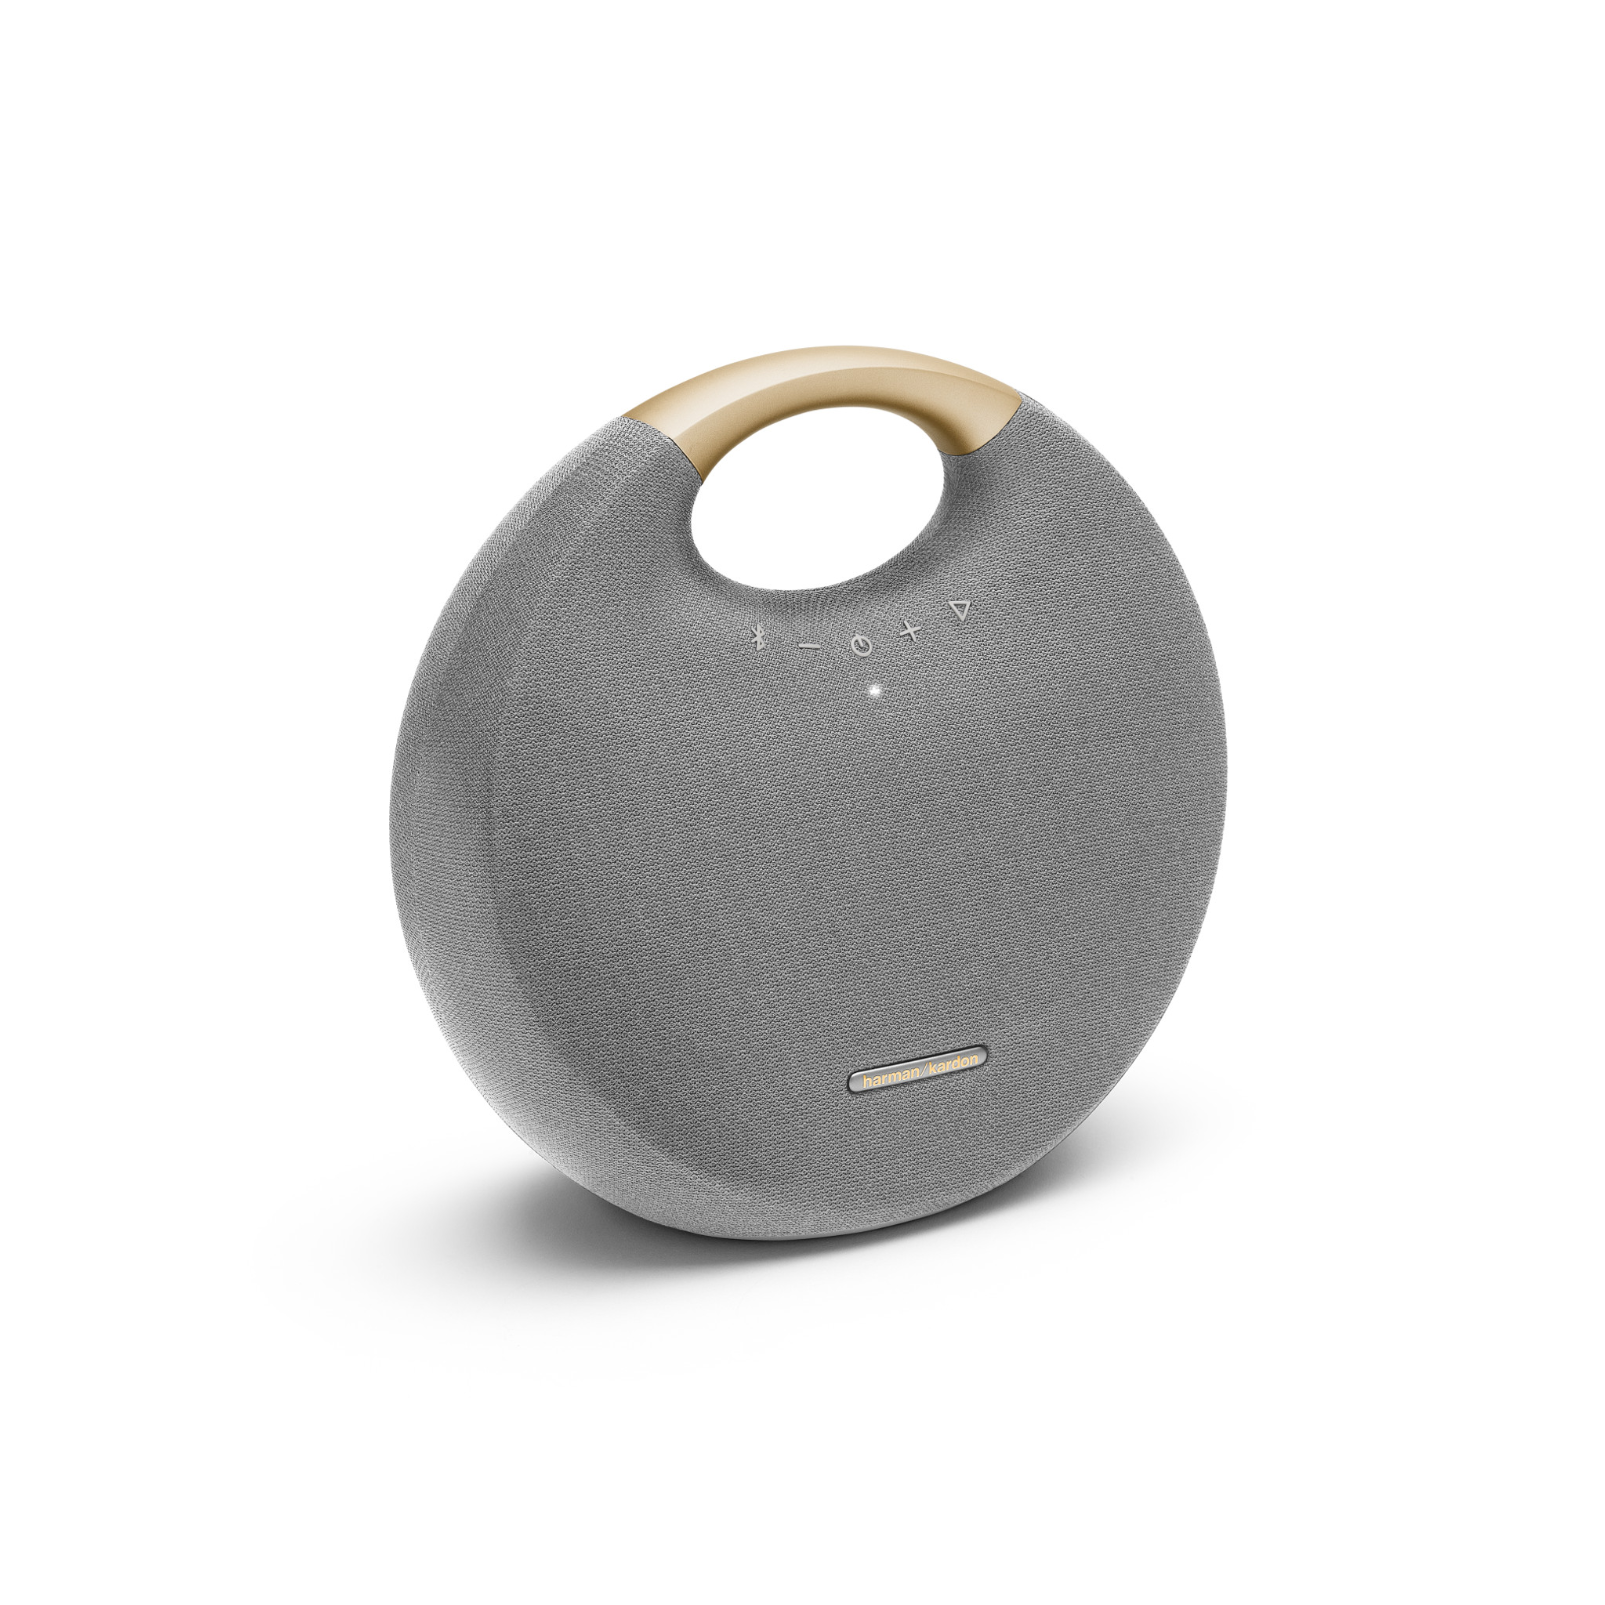 Onyx Studio 6 - Grey - Portable Bluetooth speaker - Detailshot 1